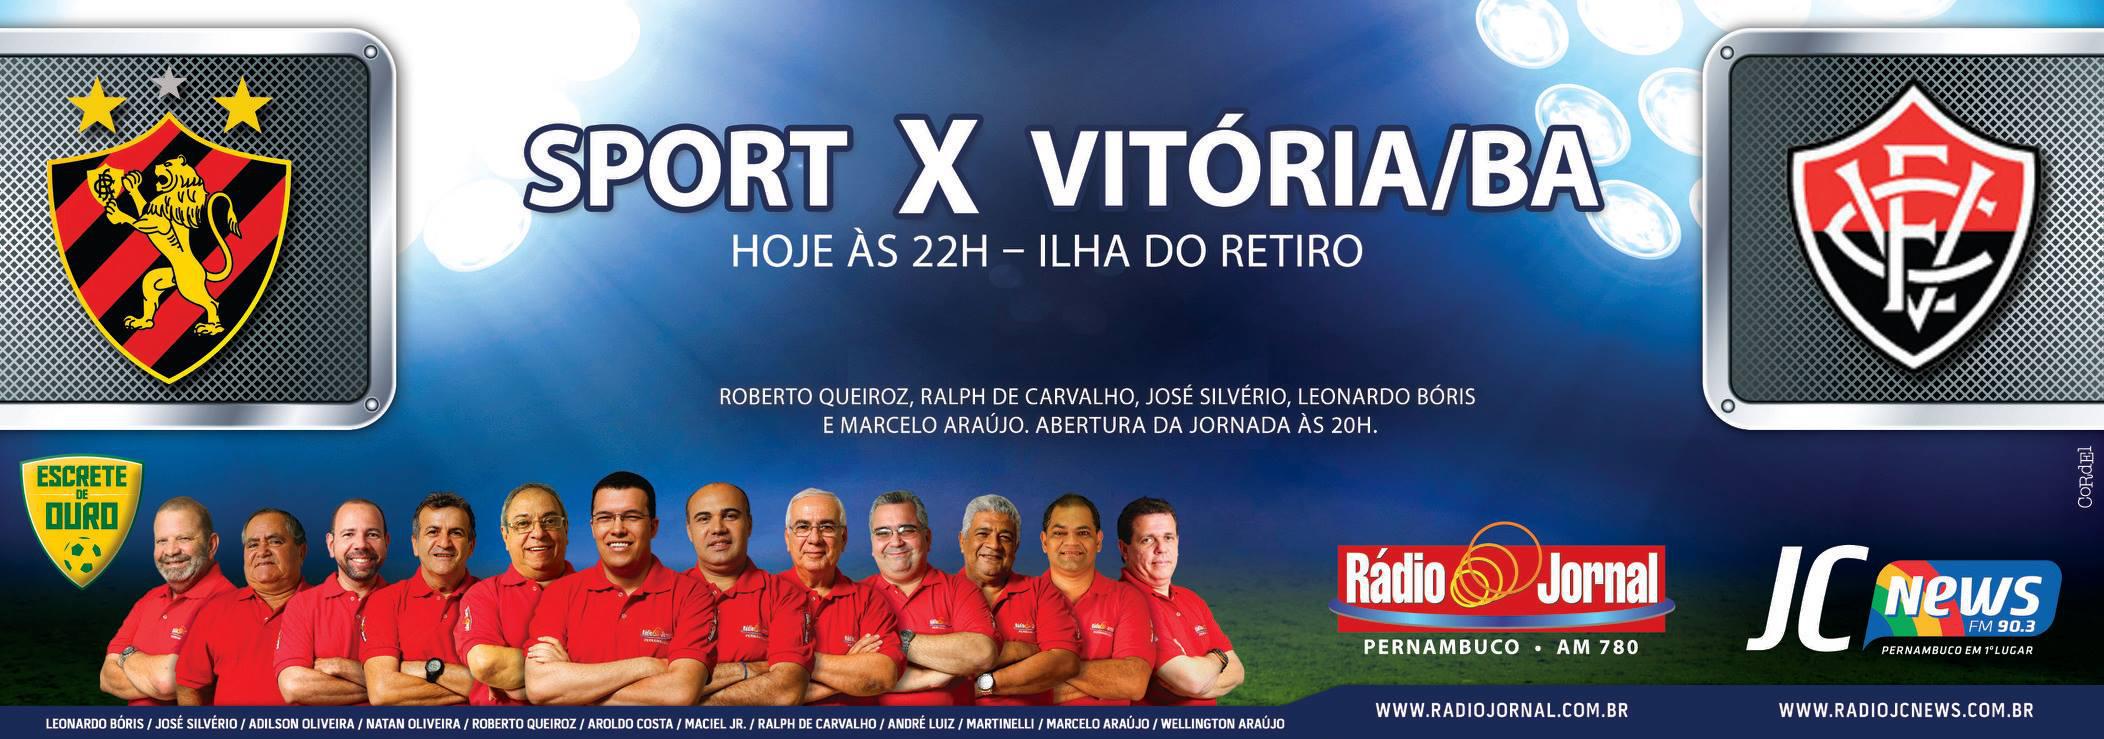 Imagem: Rádio Jornal